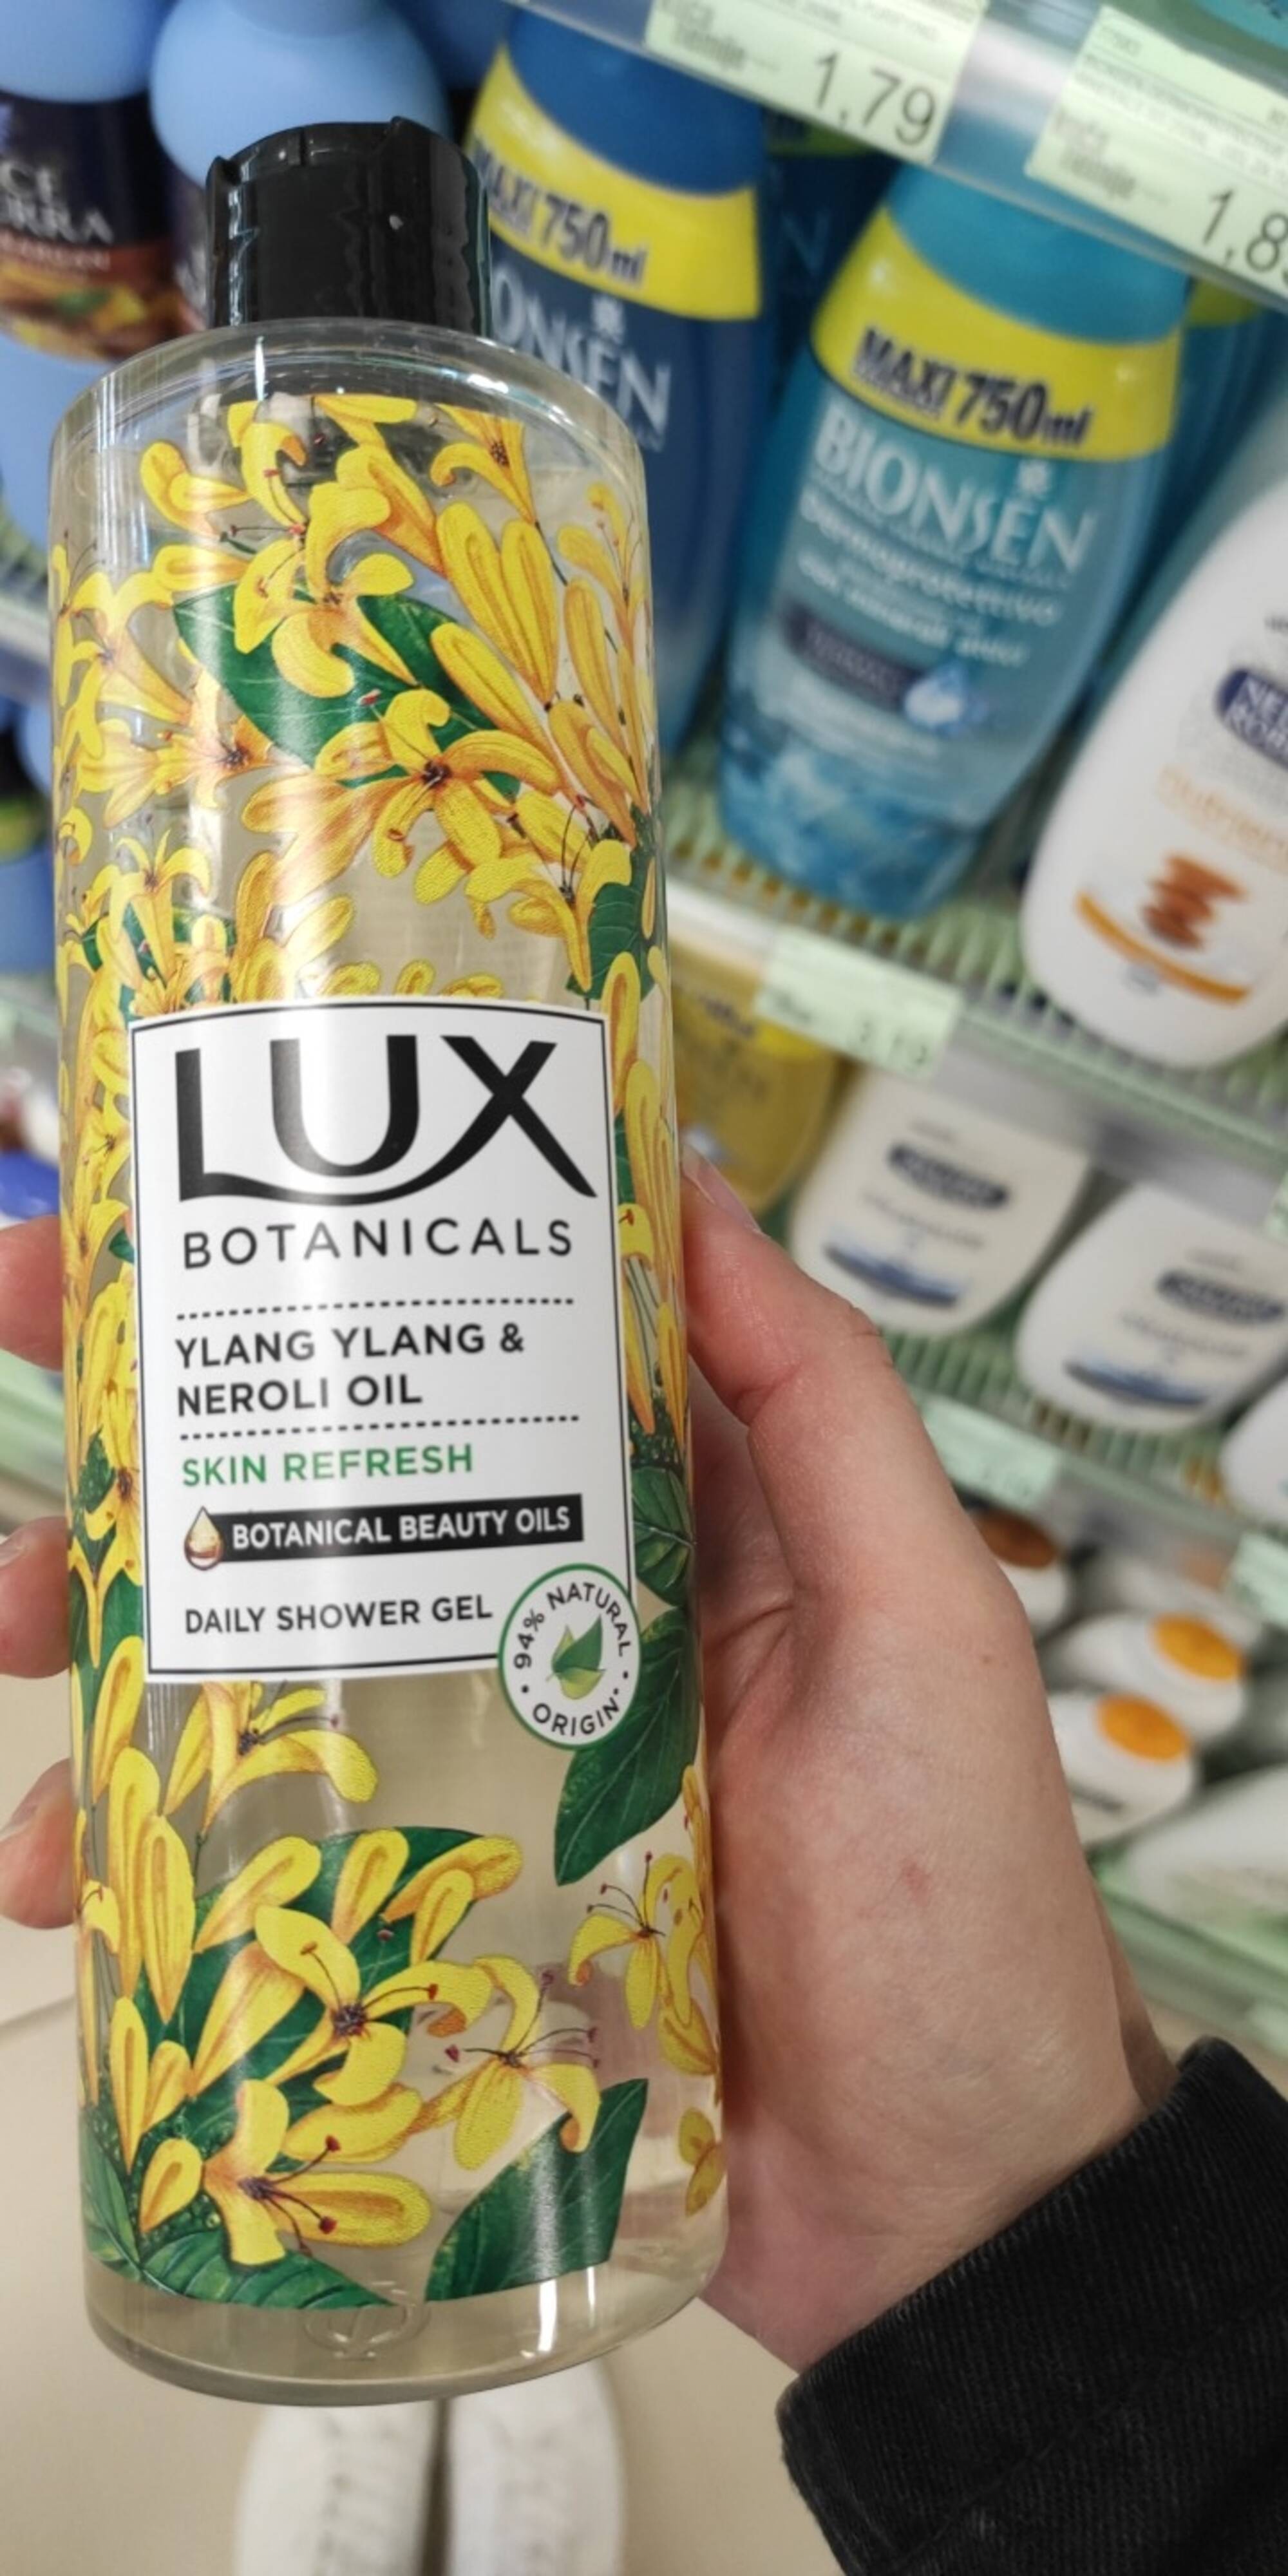 LUX BOTANICALS - Ylang ylang & neroli oil - Daily shower gel